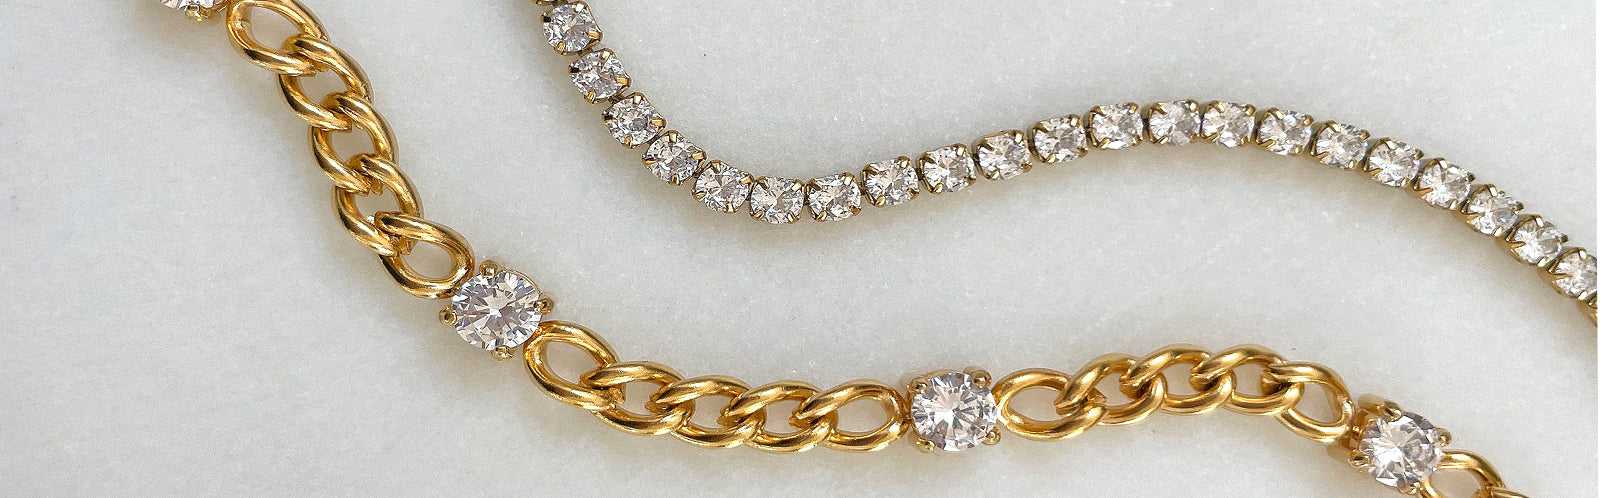 gold bracelets waterproof jewelry tarnish free